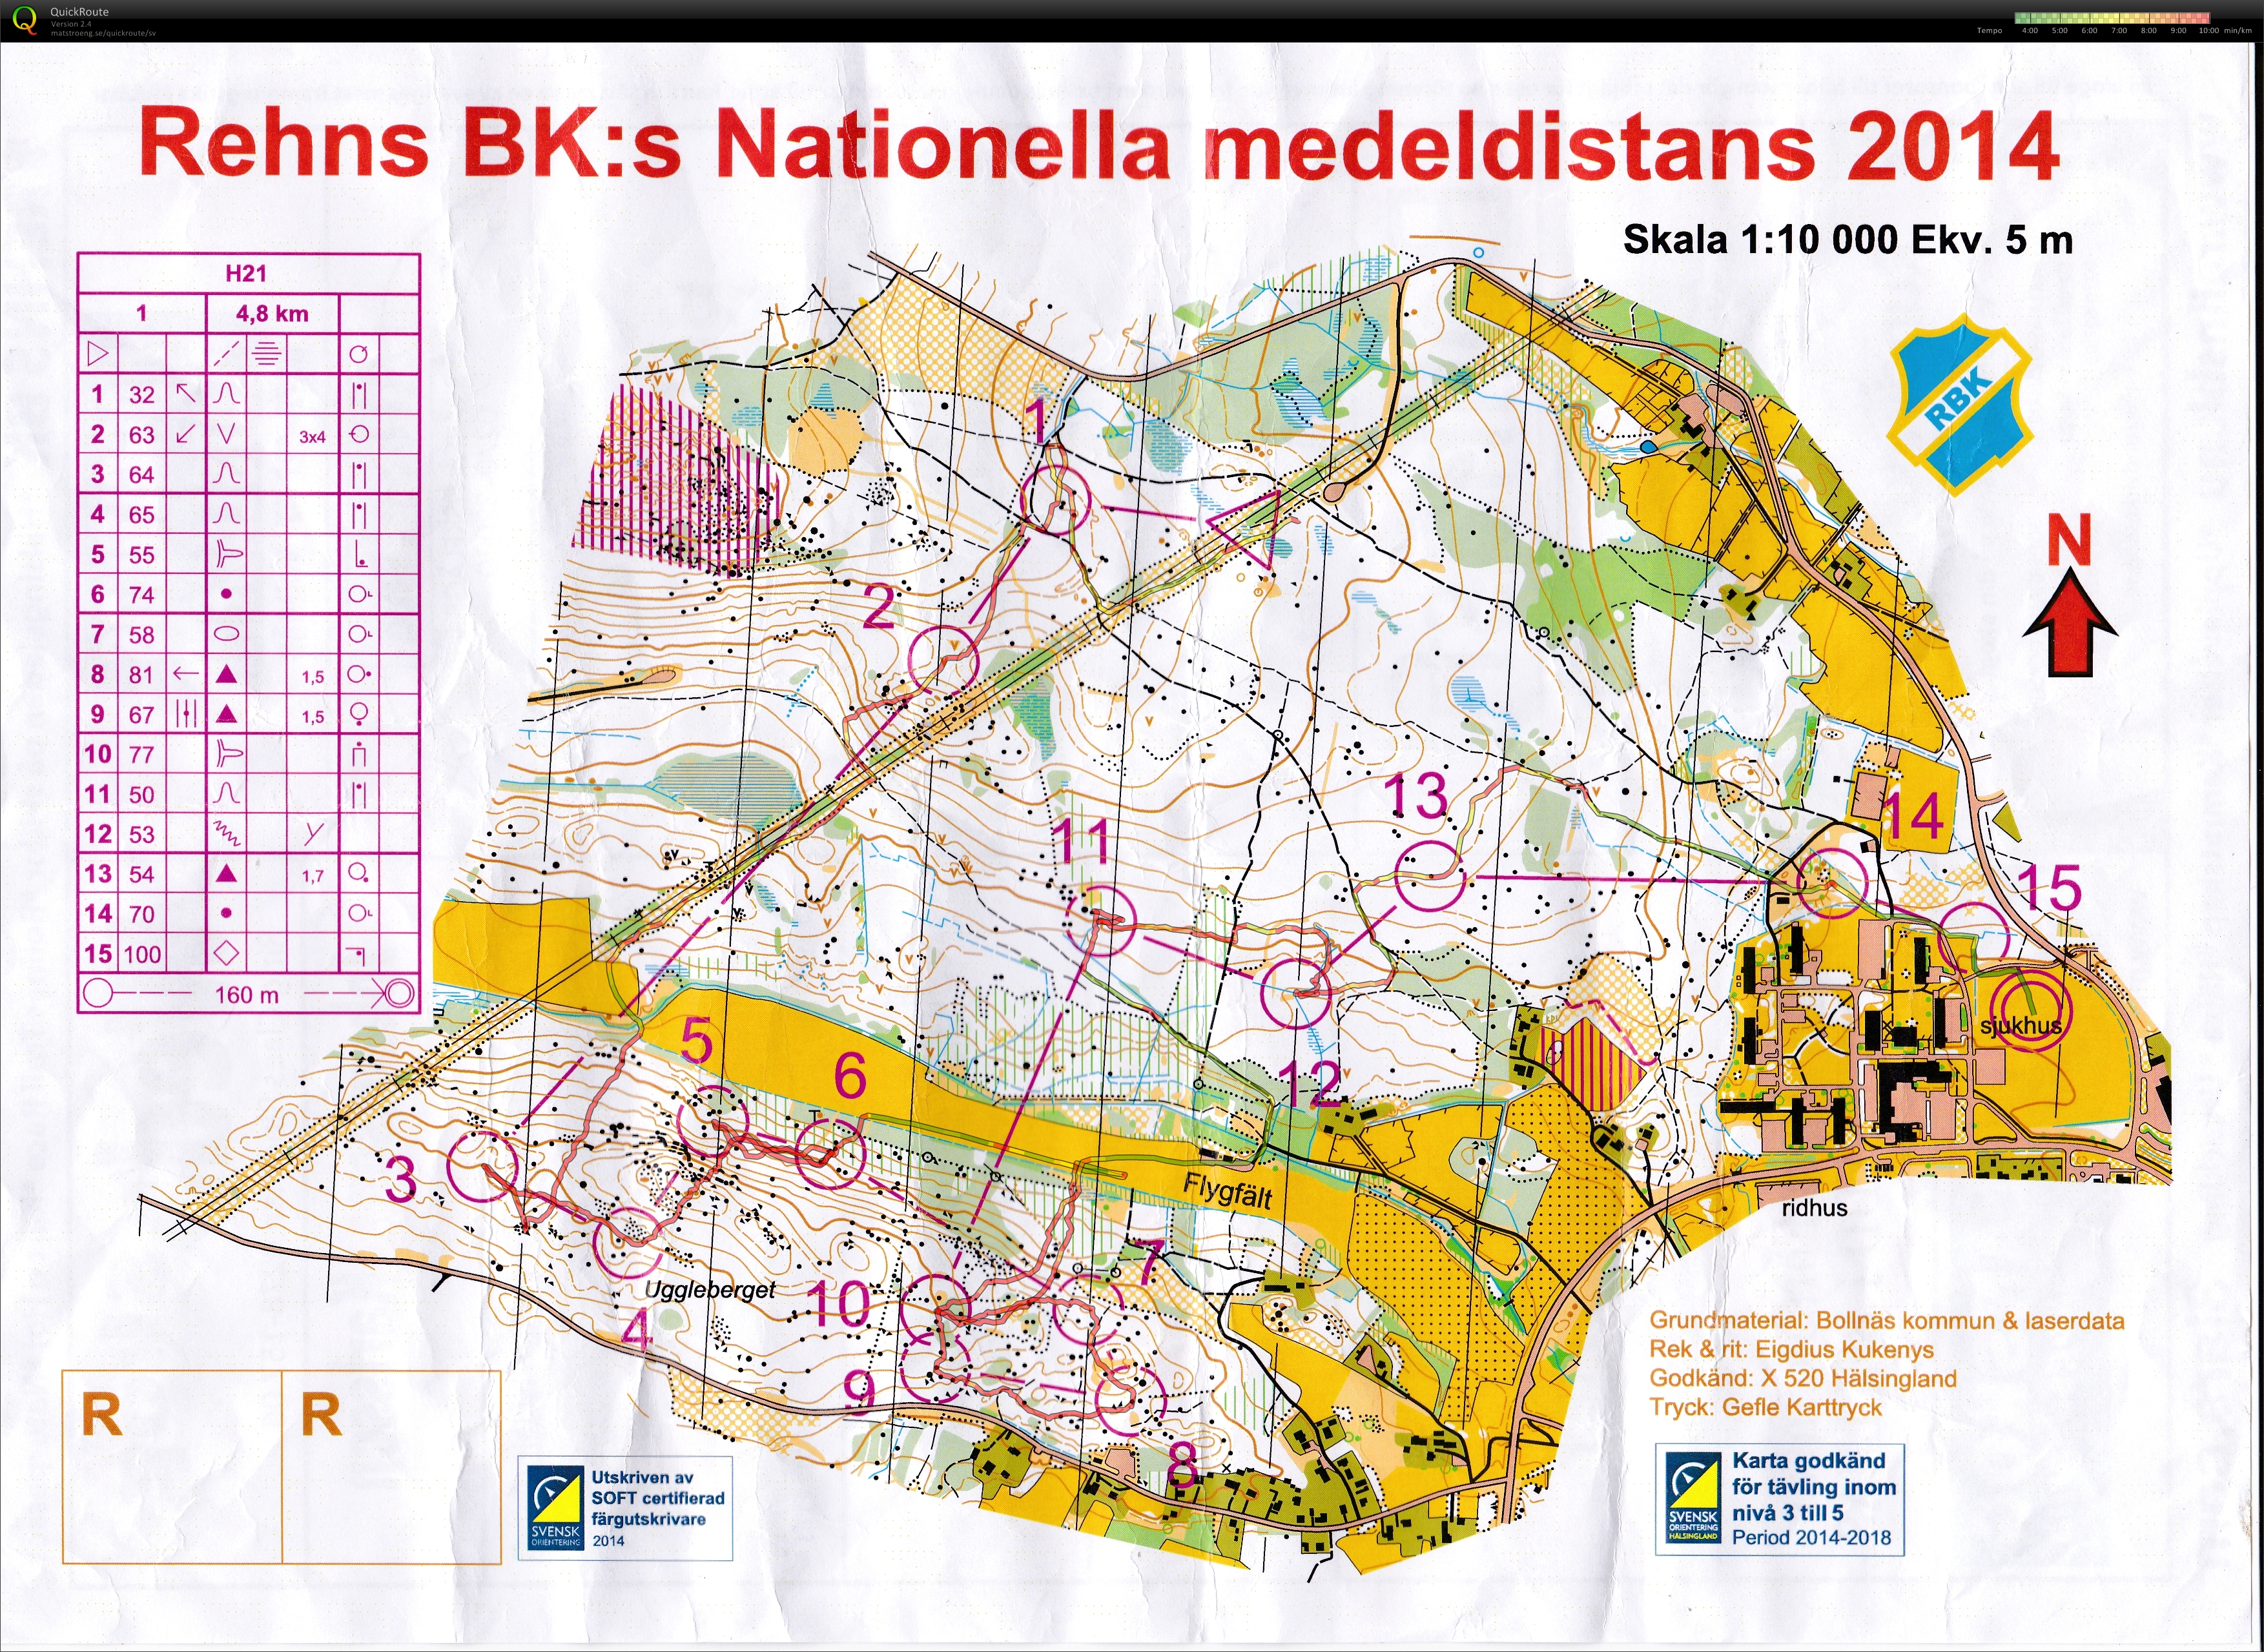 Rehns nationella medeldistans (31/05/2014)